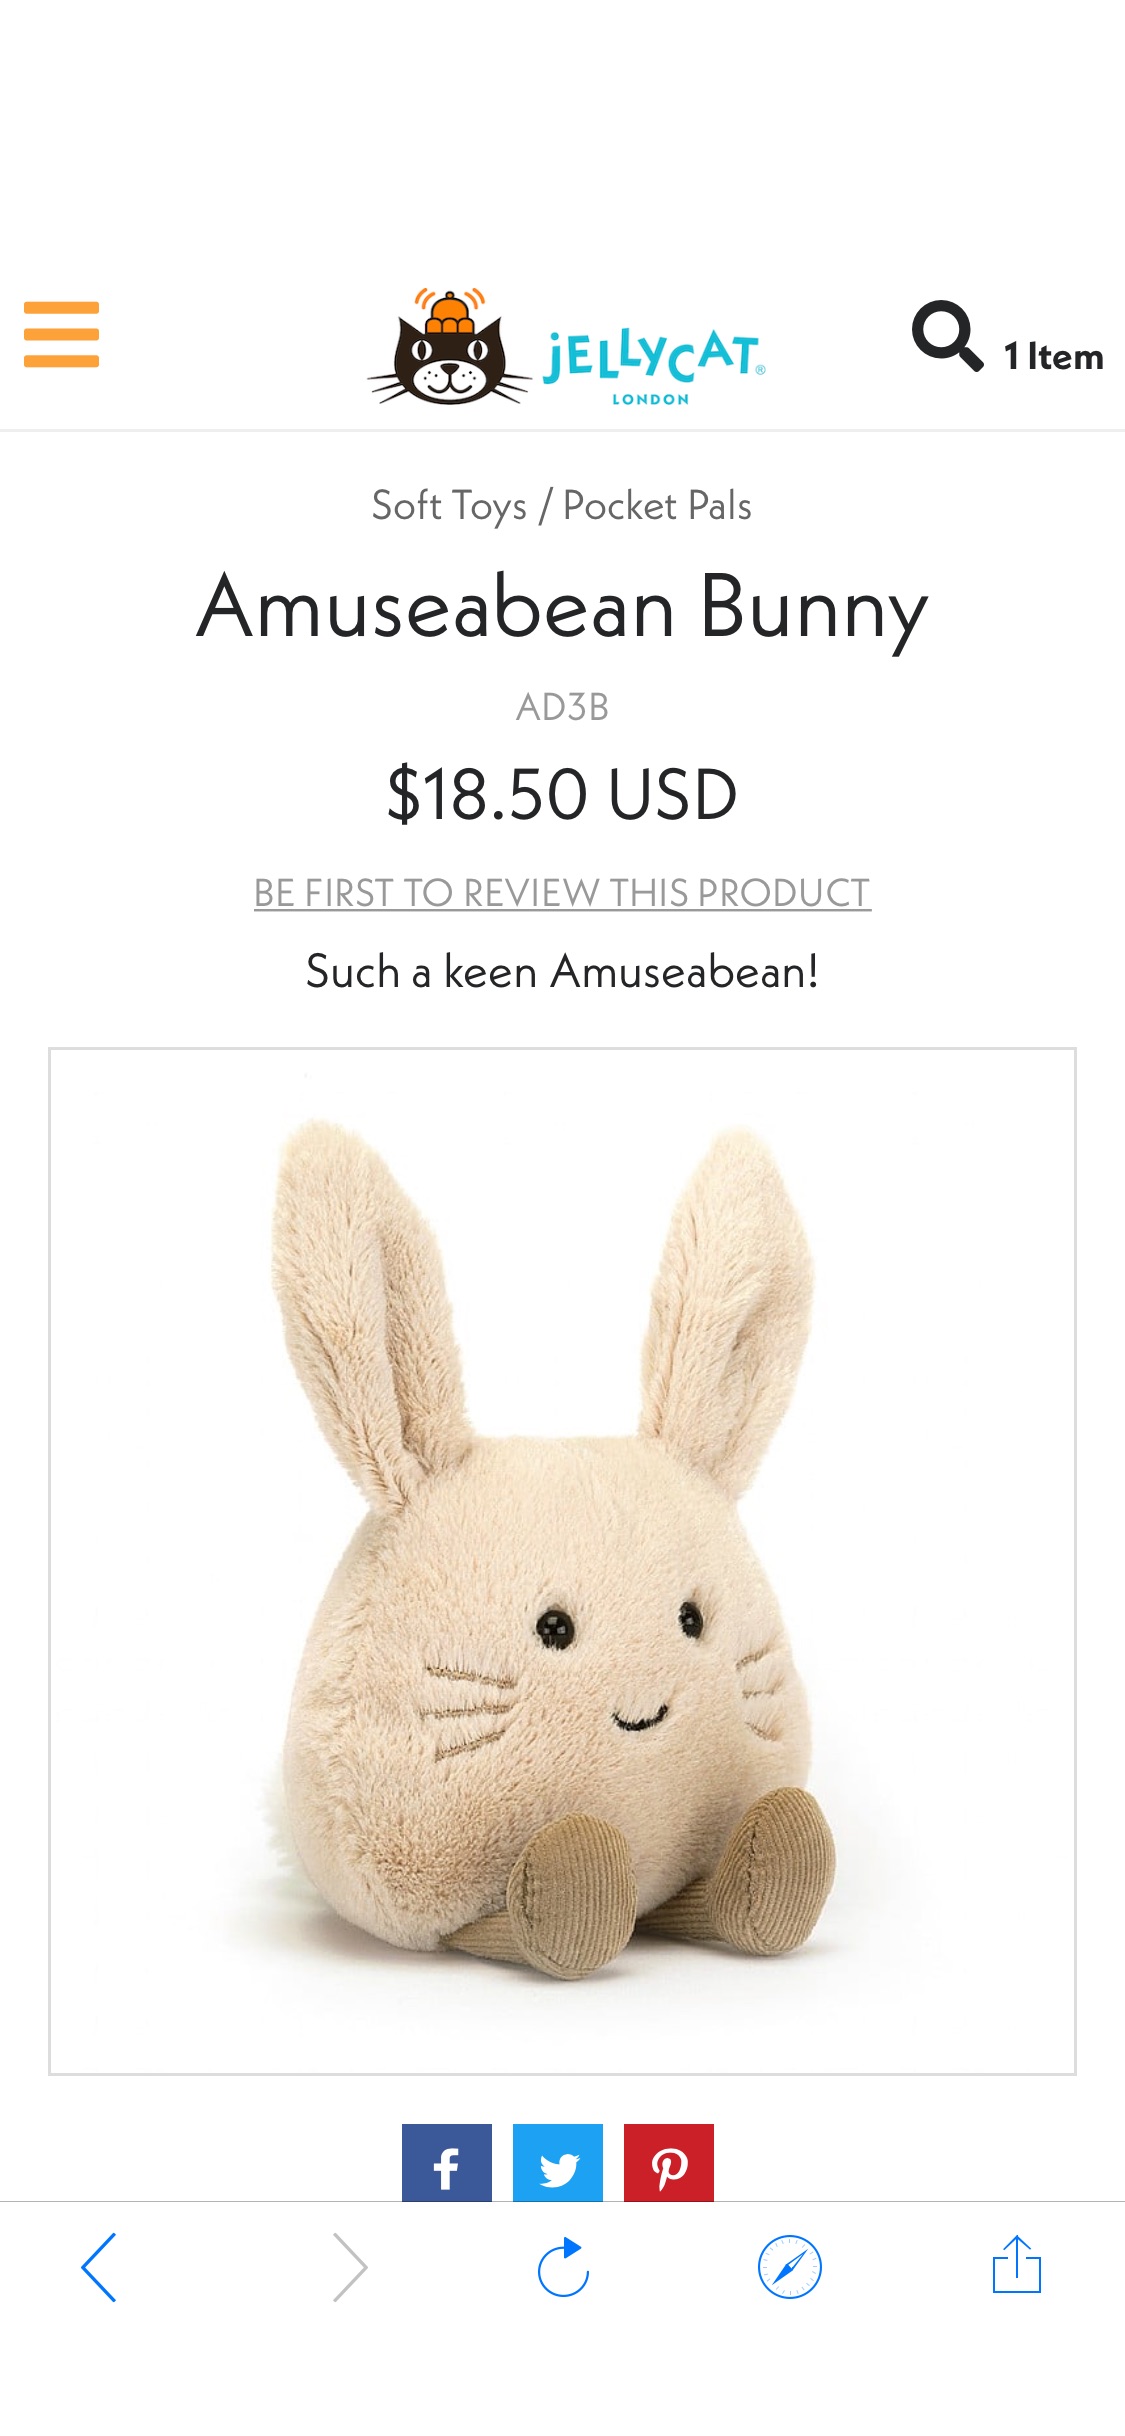 Buy Amuseabean Bunny - Online at Jellycat.com